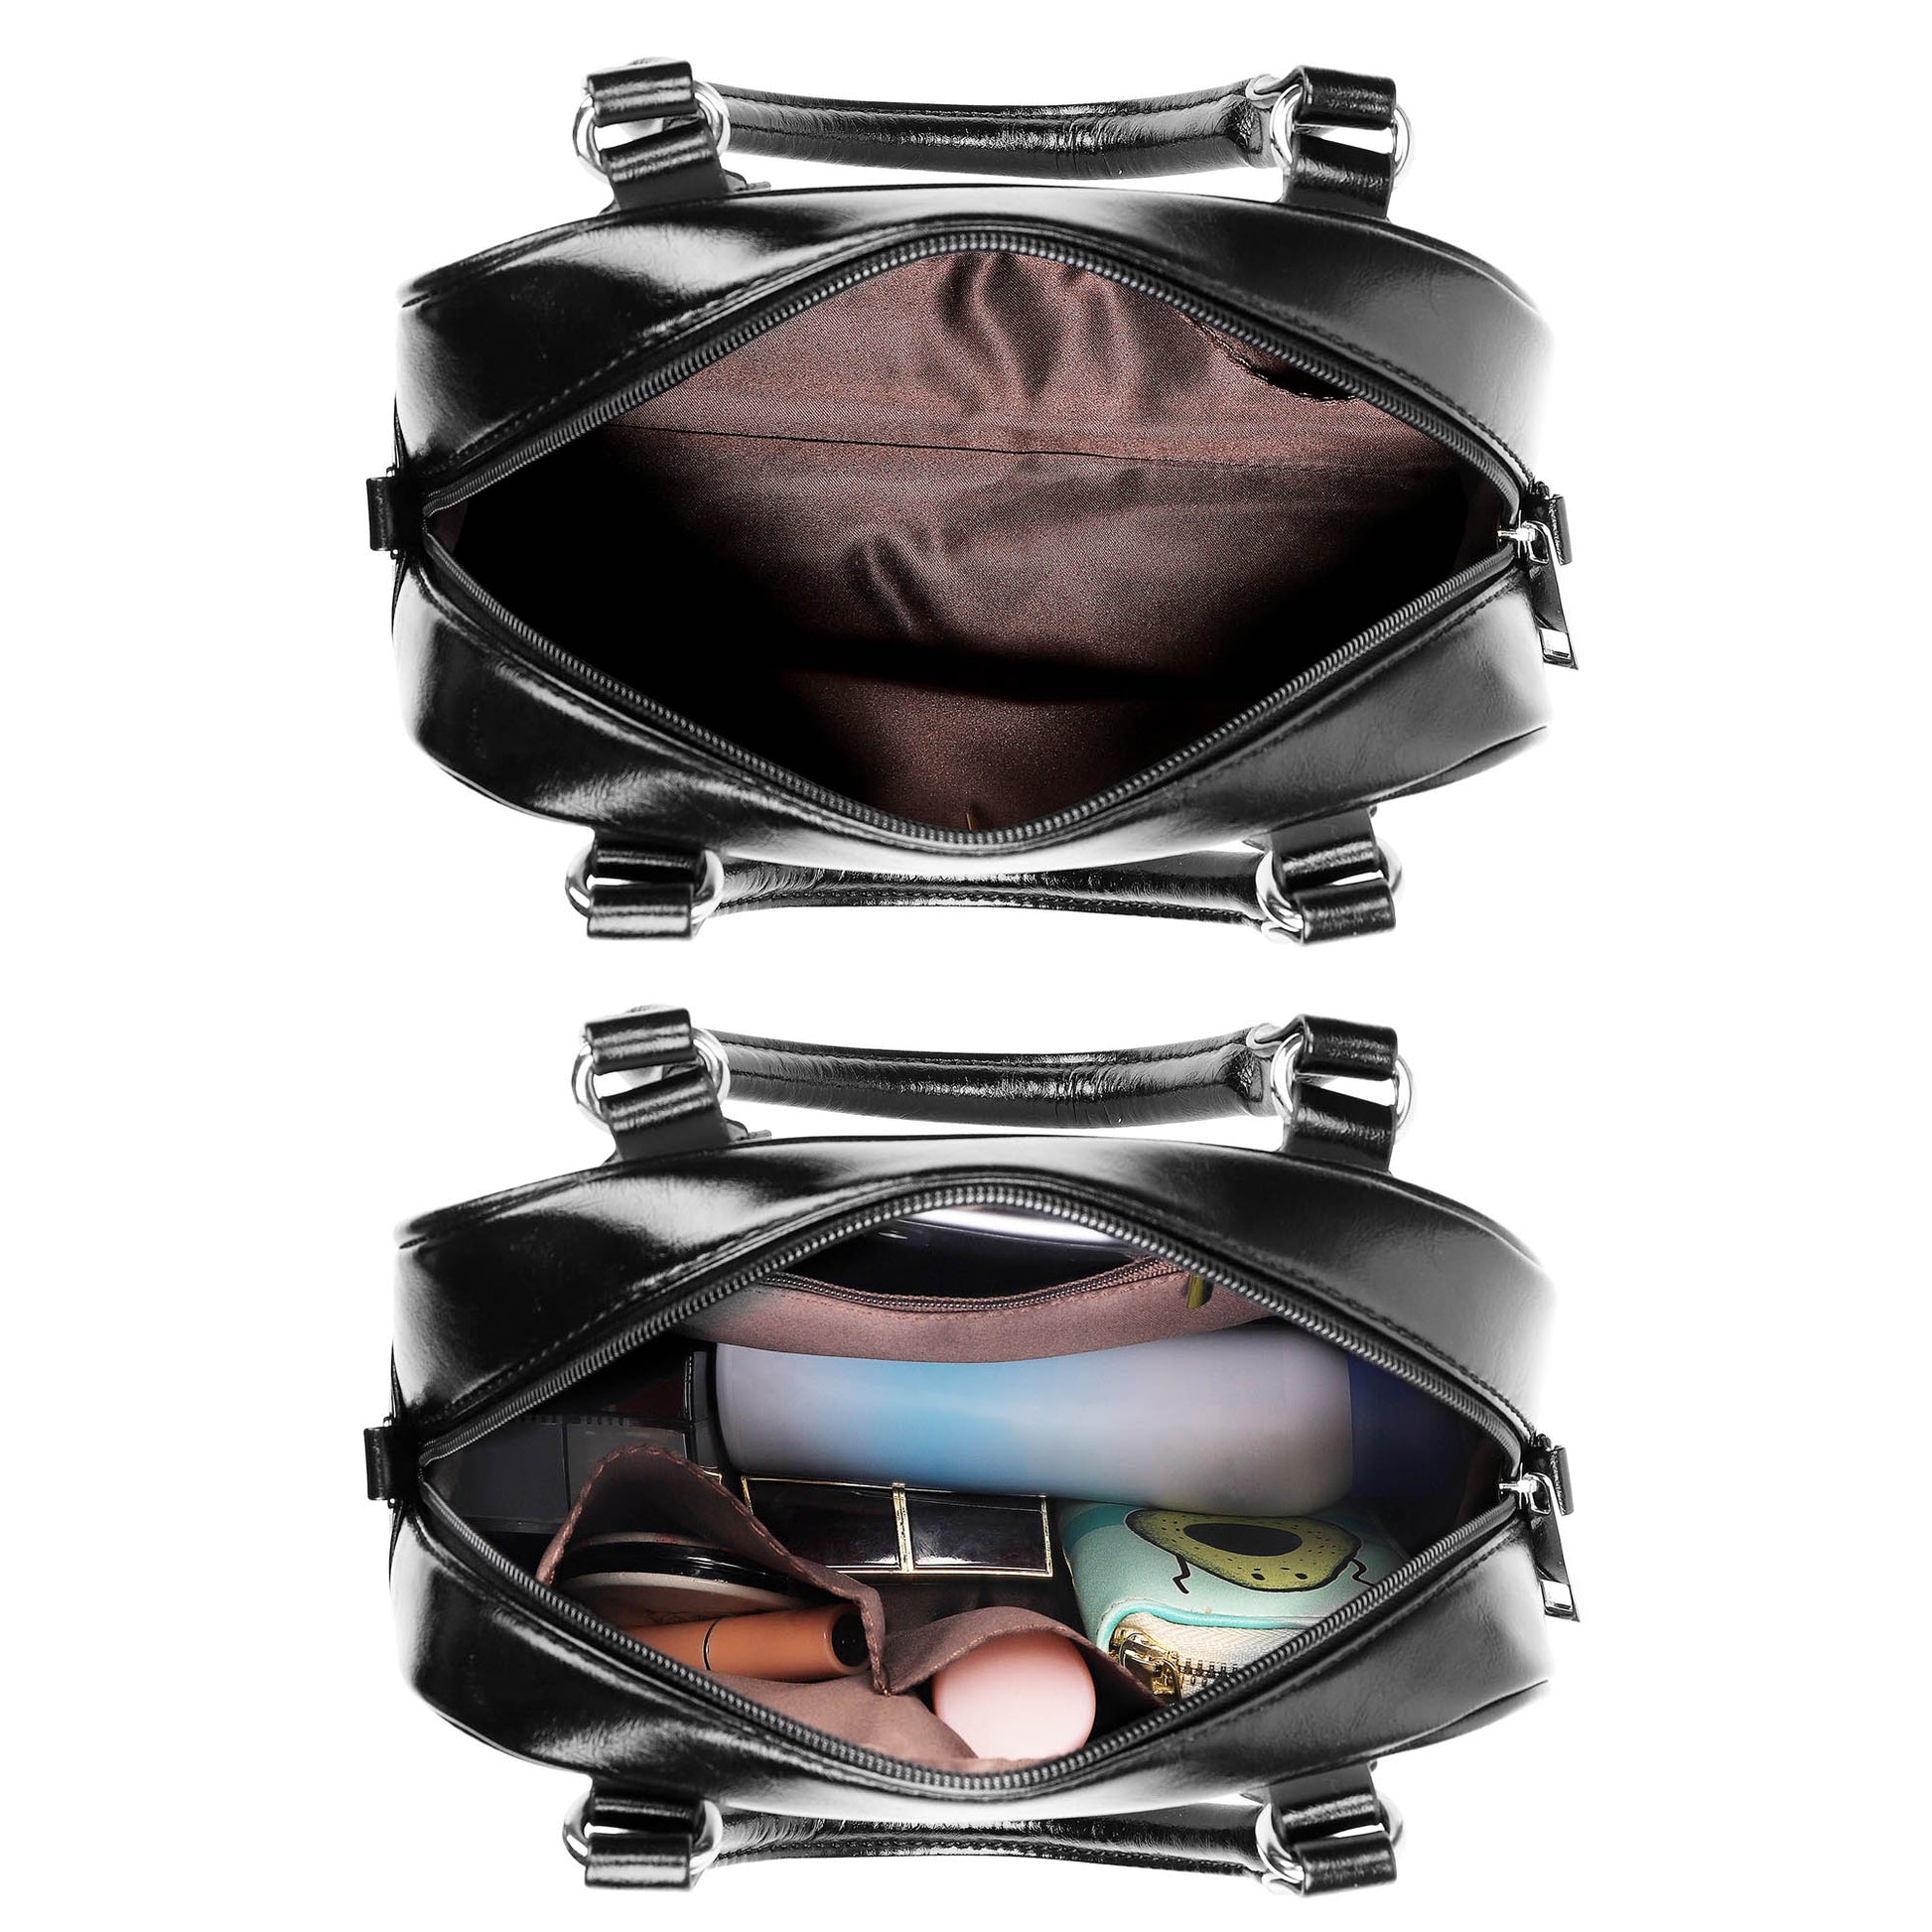 Baxter Tartan Shoulder Handbags with Family Crest - Tartanvibesclothing